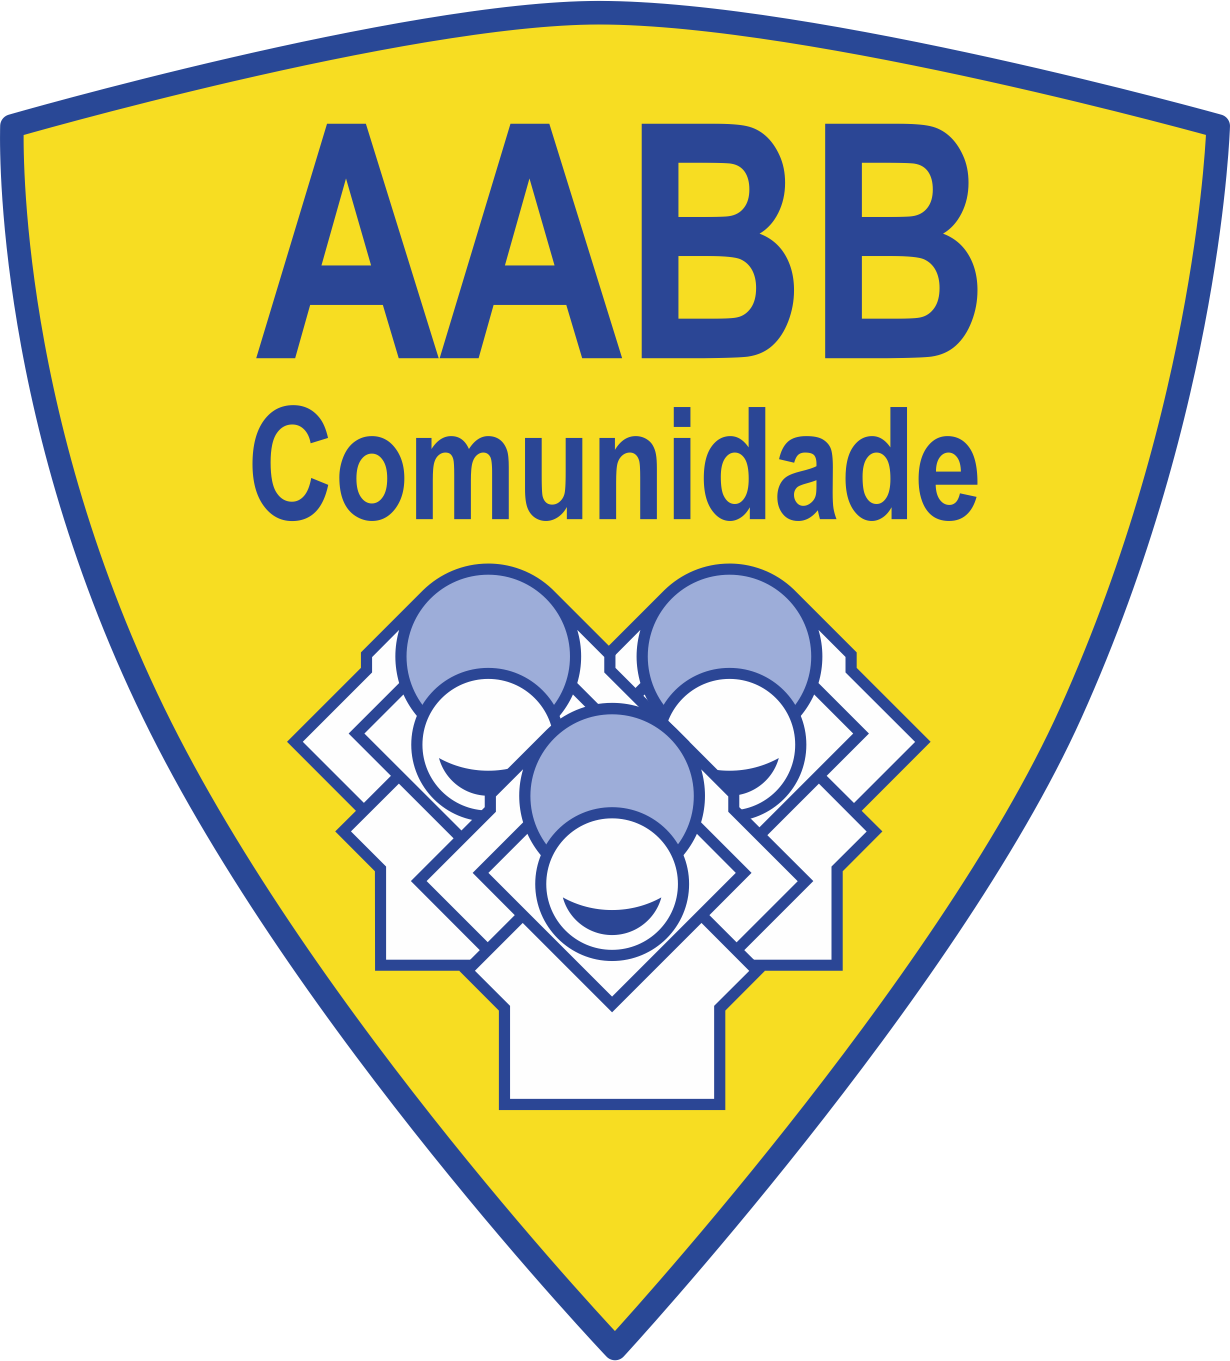 Logo Aabb PNG - 99432